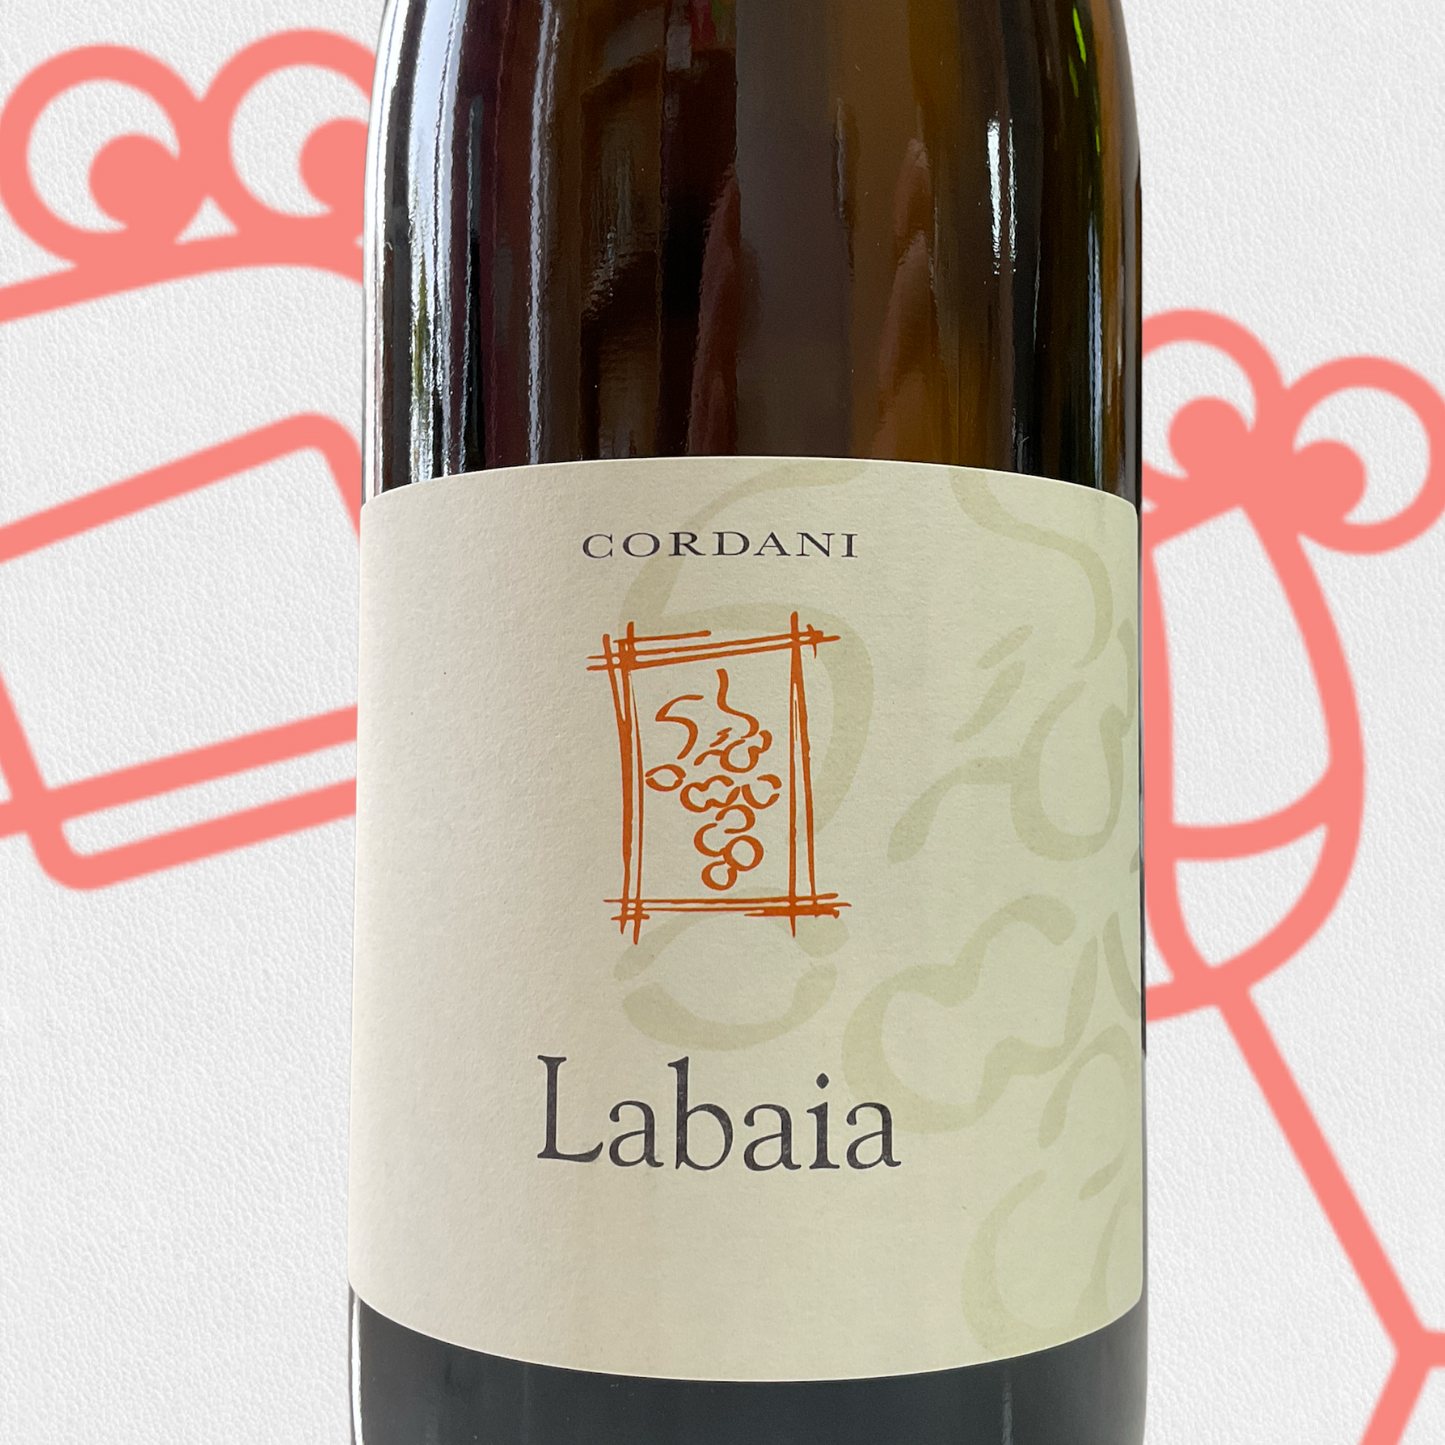 Cordani 'Labaia' Pet-Nat 2020 Emilia-Romagna, Italy - Williston Park Wines & Spirits